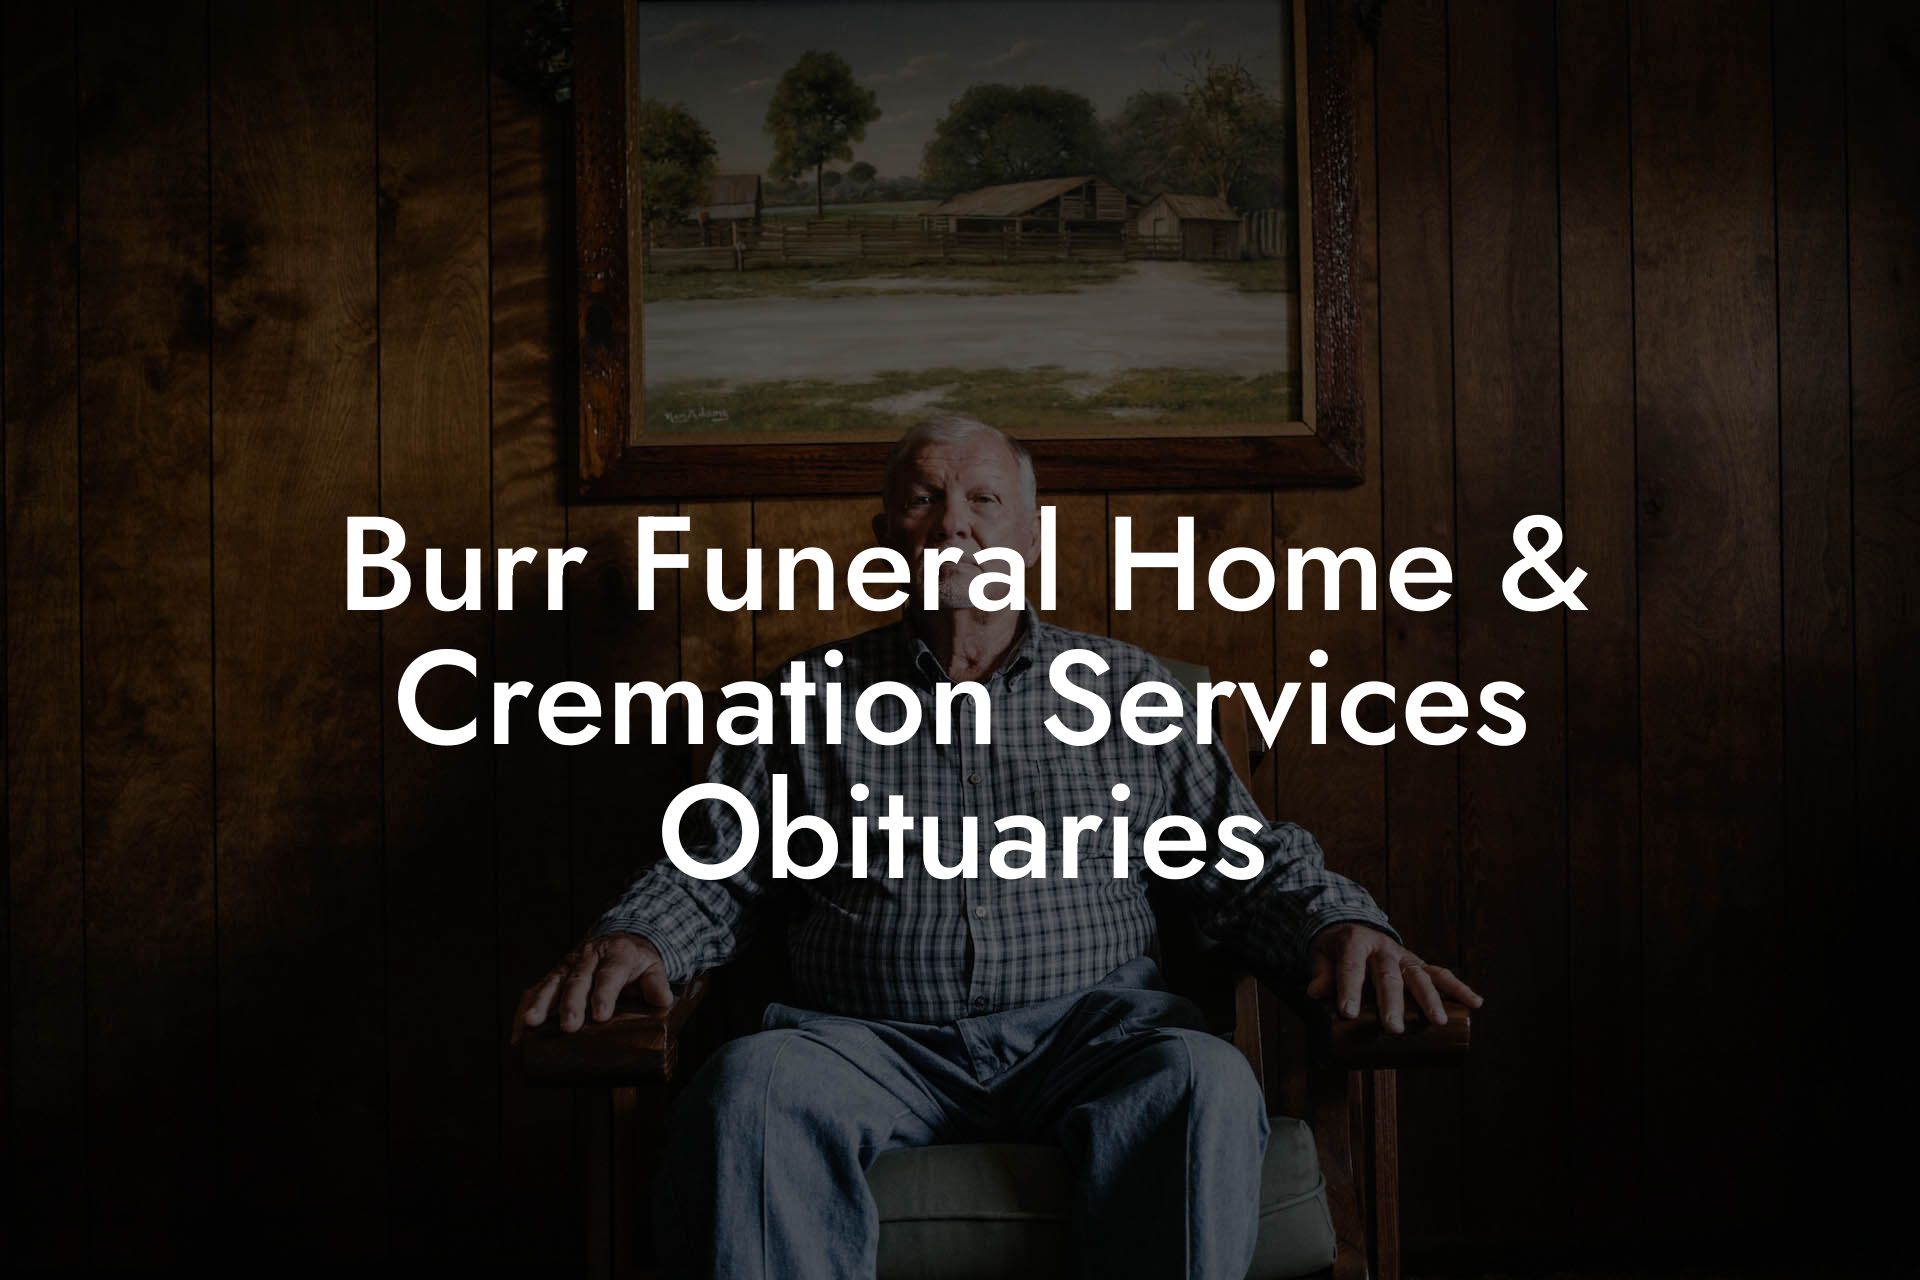 Burr Funeral Home & Cremation Services Obituaries